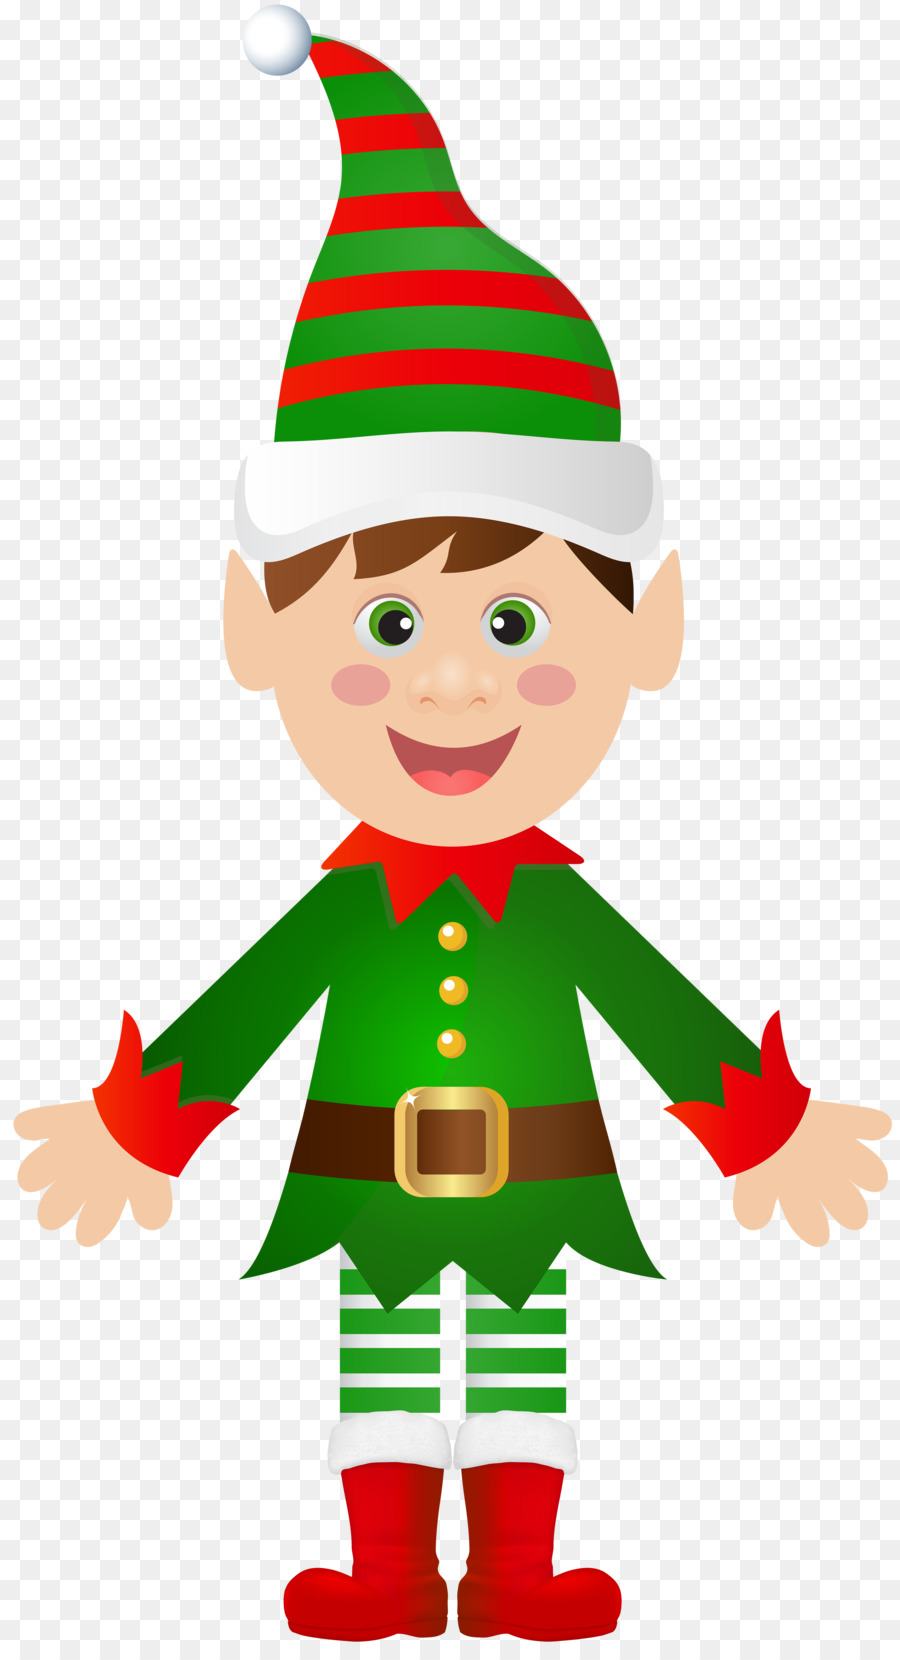 Santa Claus Christmas tree Christmas elf Clip art - christmas elf png download - 4380*8000 - Free Transparent Santa Claus png Download.